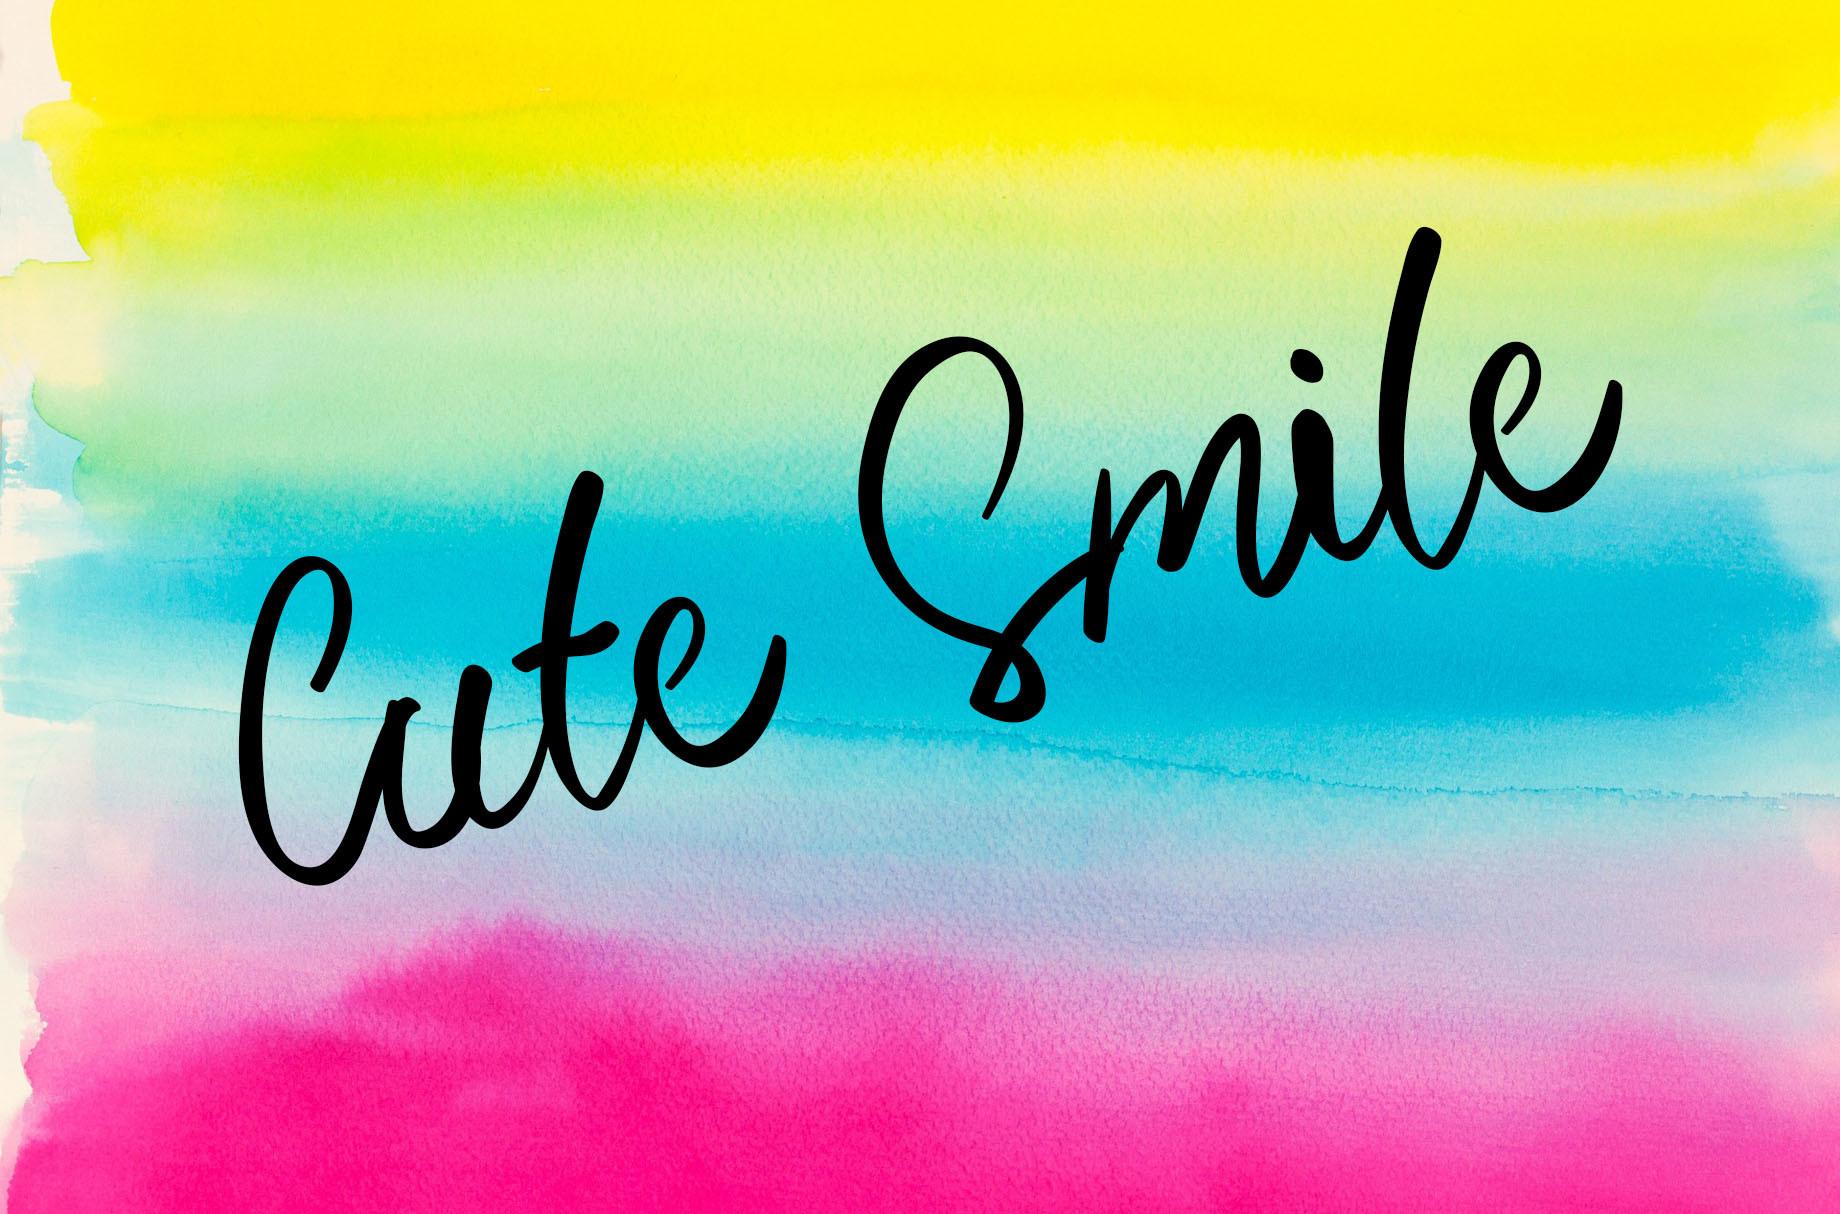 Cute Smile Font